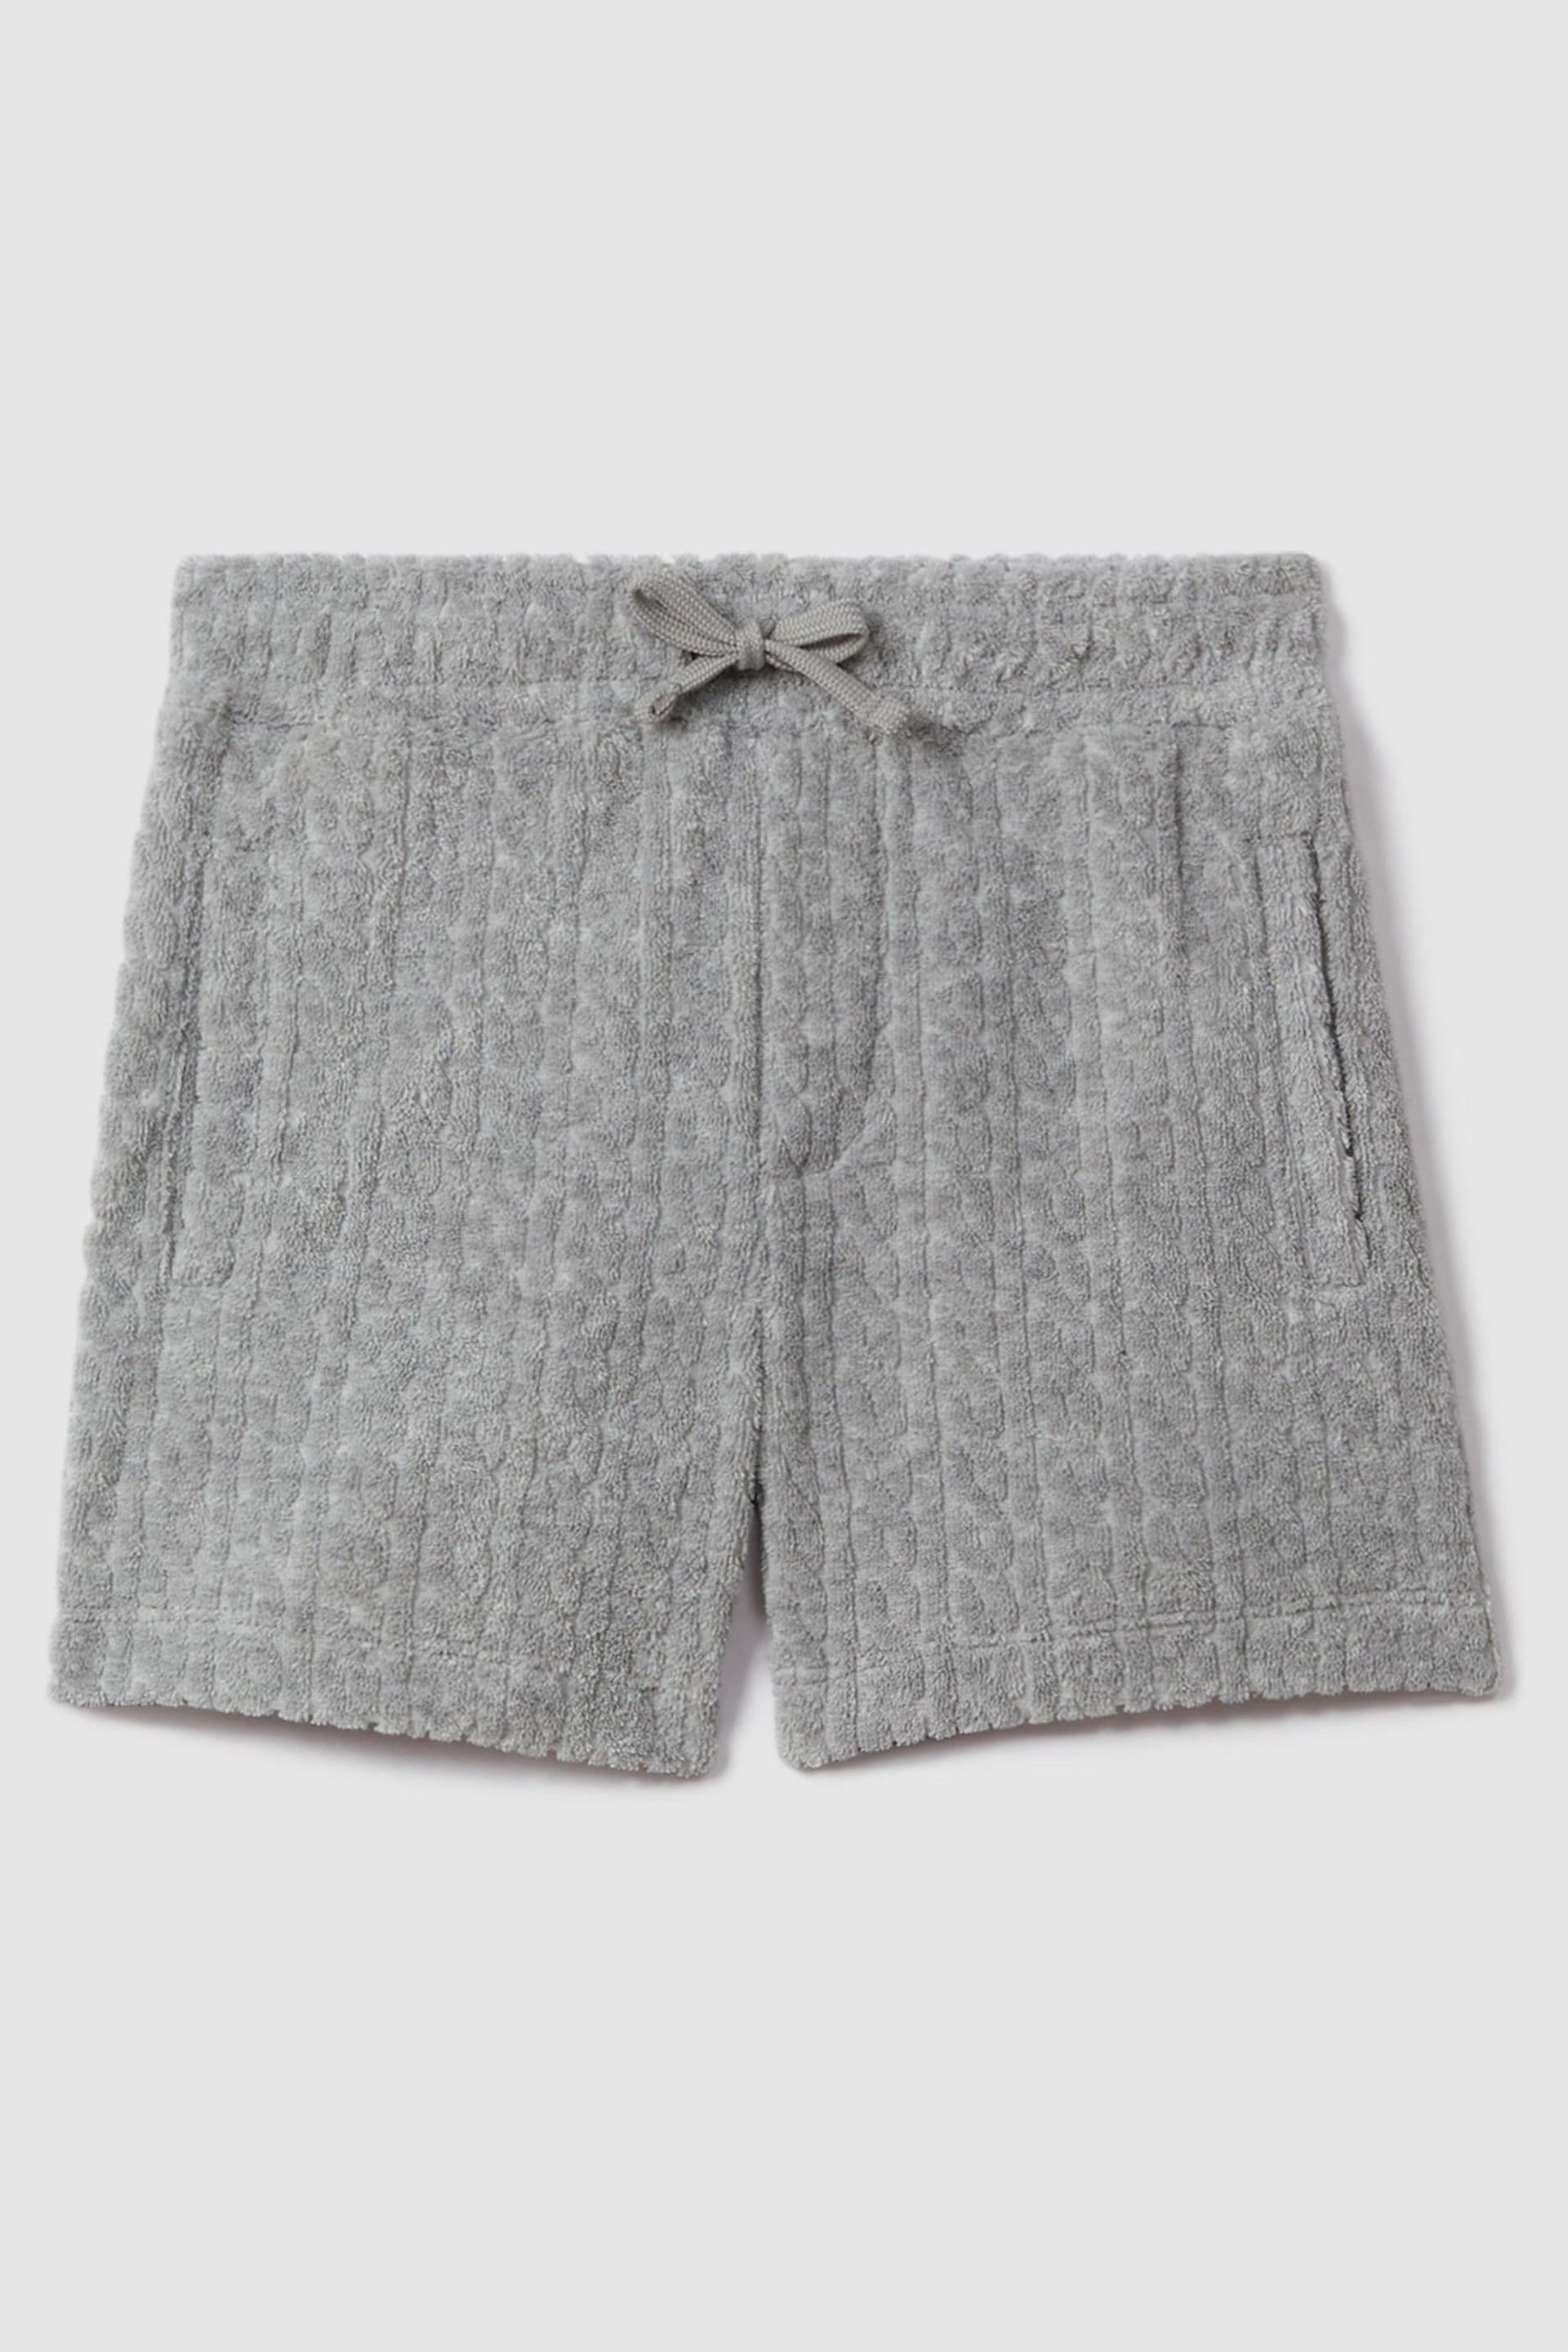 Reiss Soft Grey Fletcher Senior Towelling Drawstring Shorts - Image 2 of 4